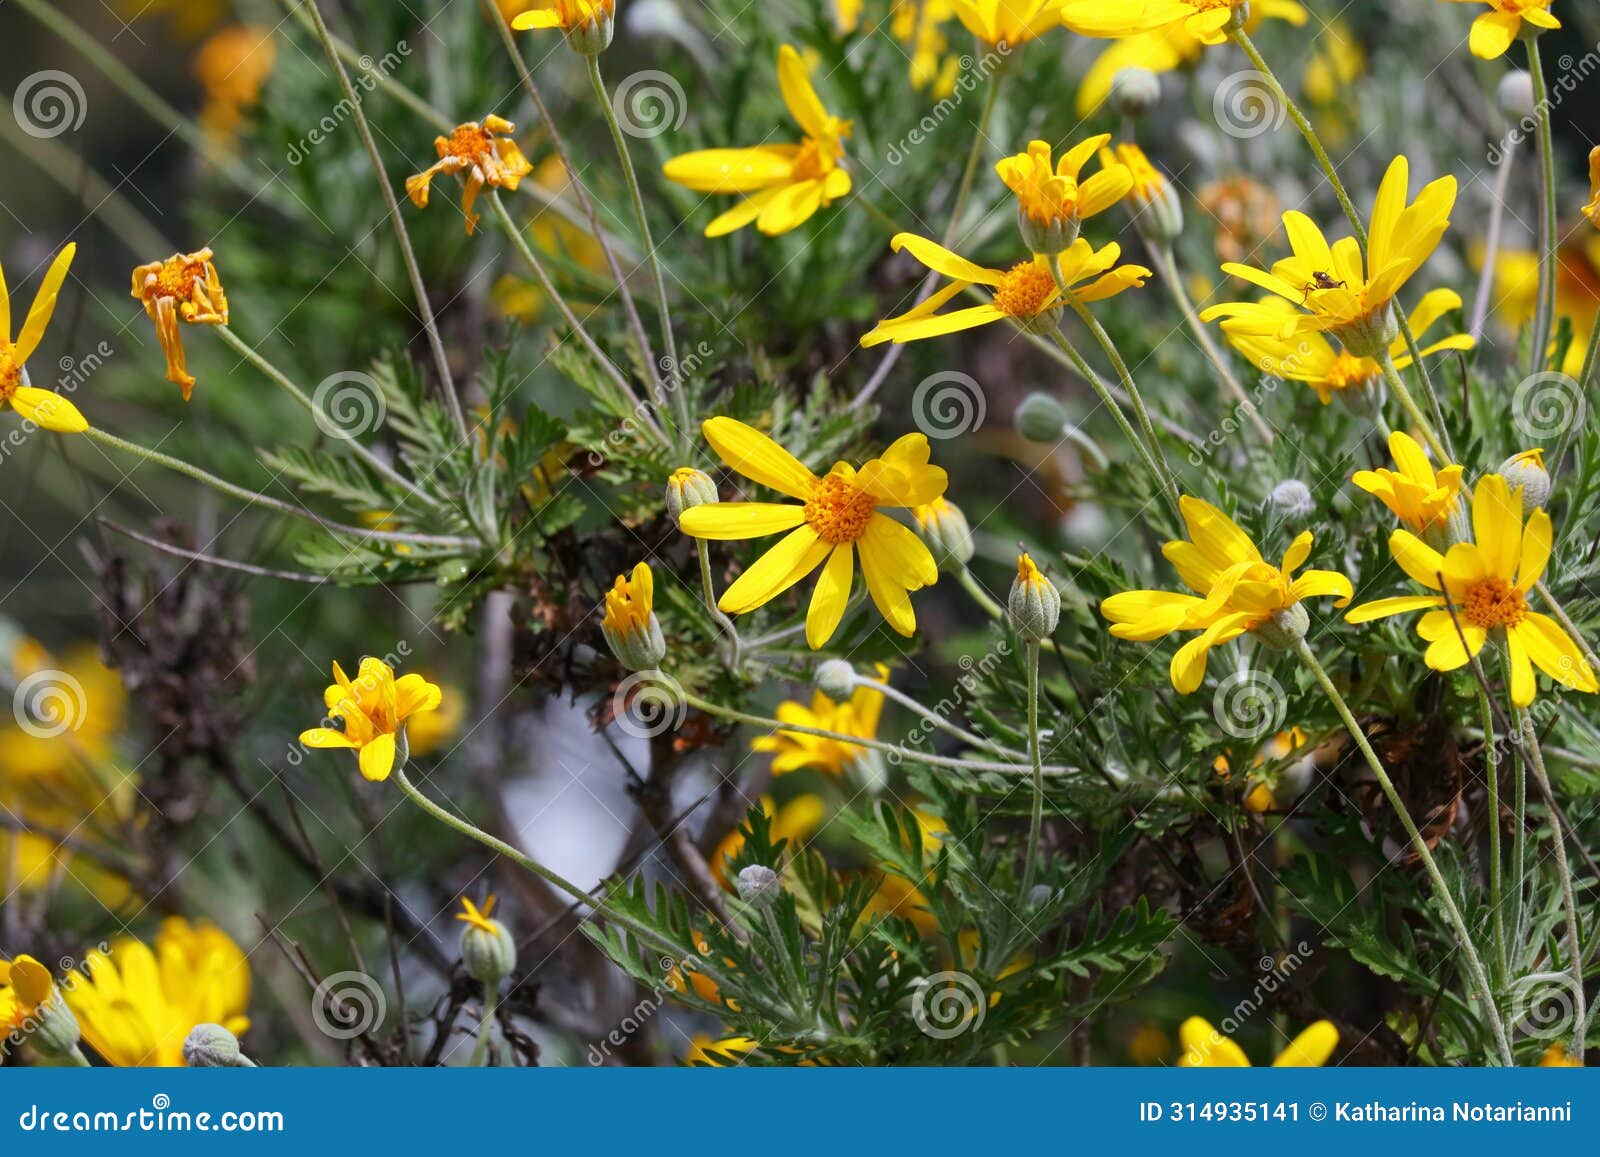 spring bloom series - bright yellow daisies - daisy shrub - euryops pectinatus